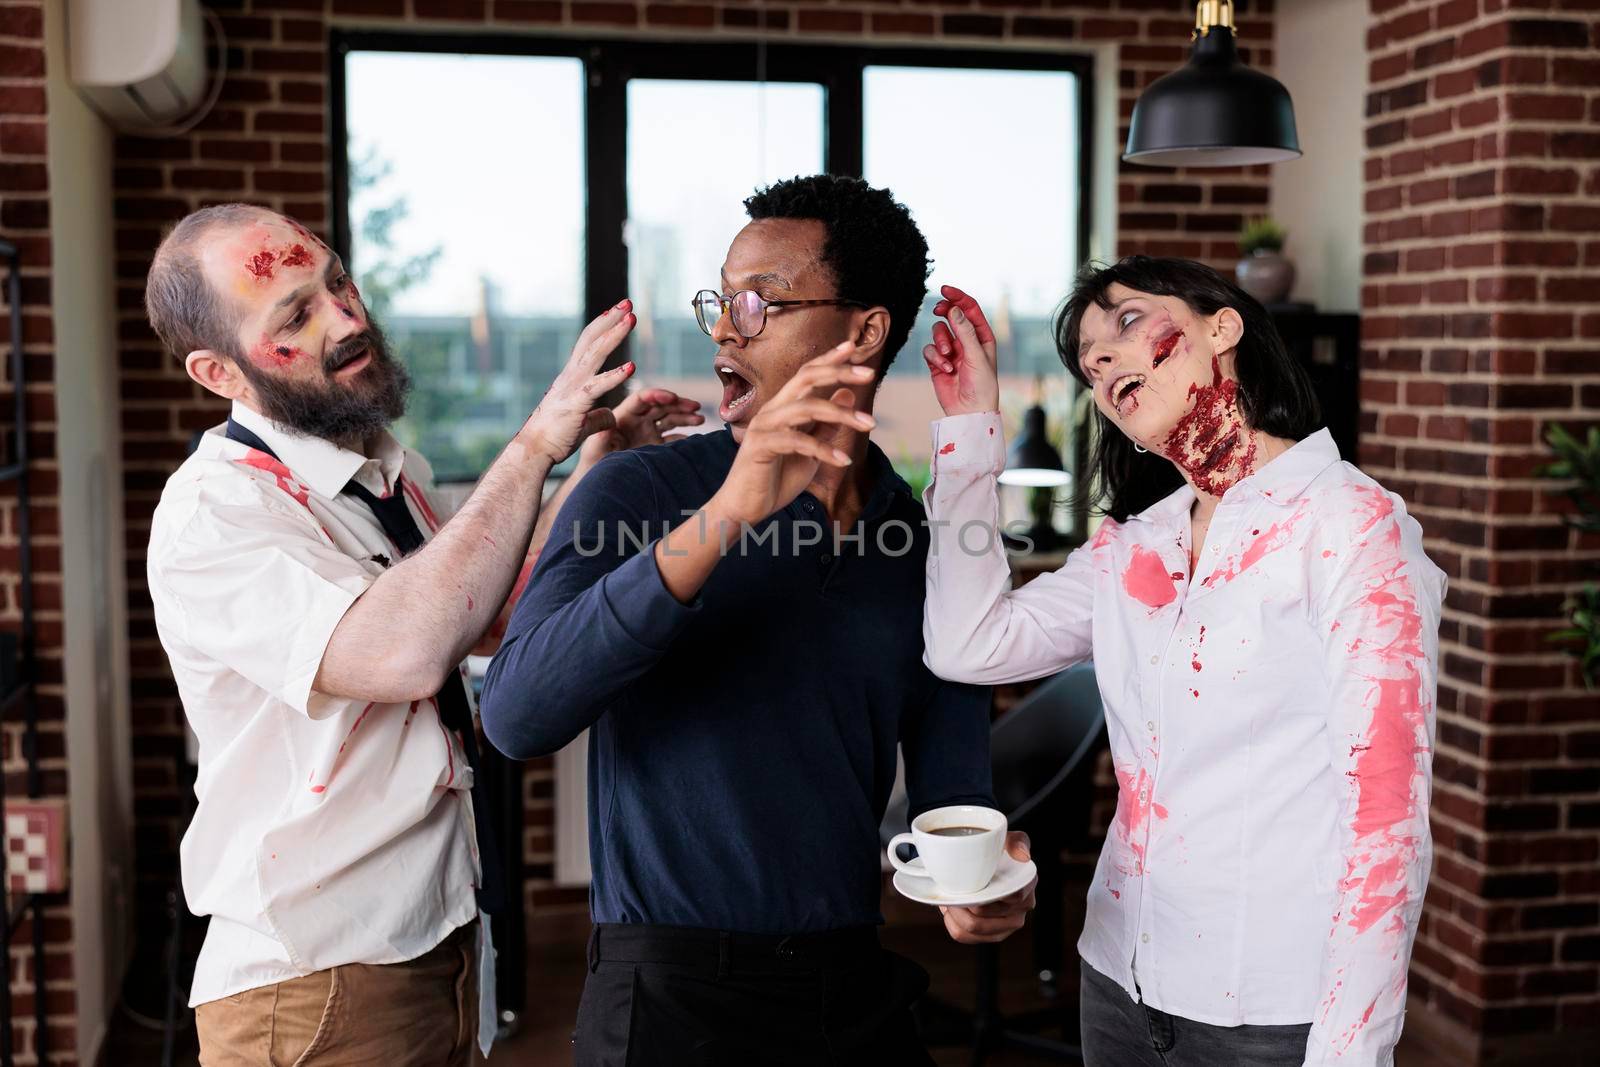 Horrible cruel zombies attacking man in office by DCStudio